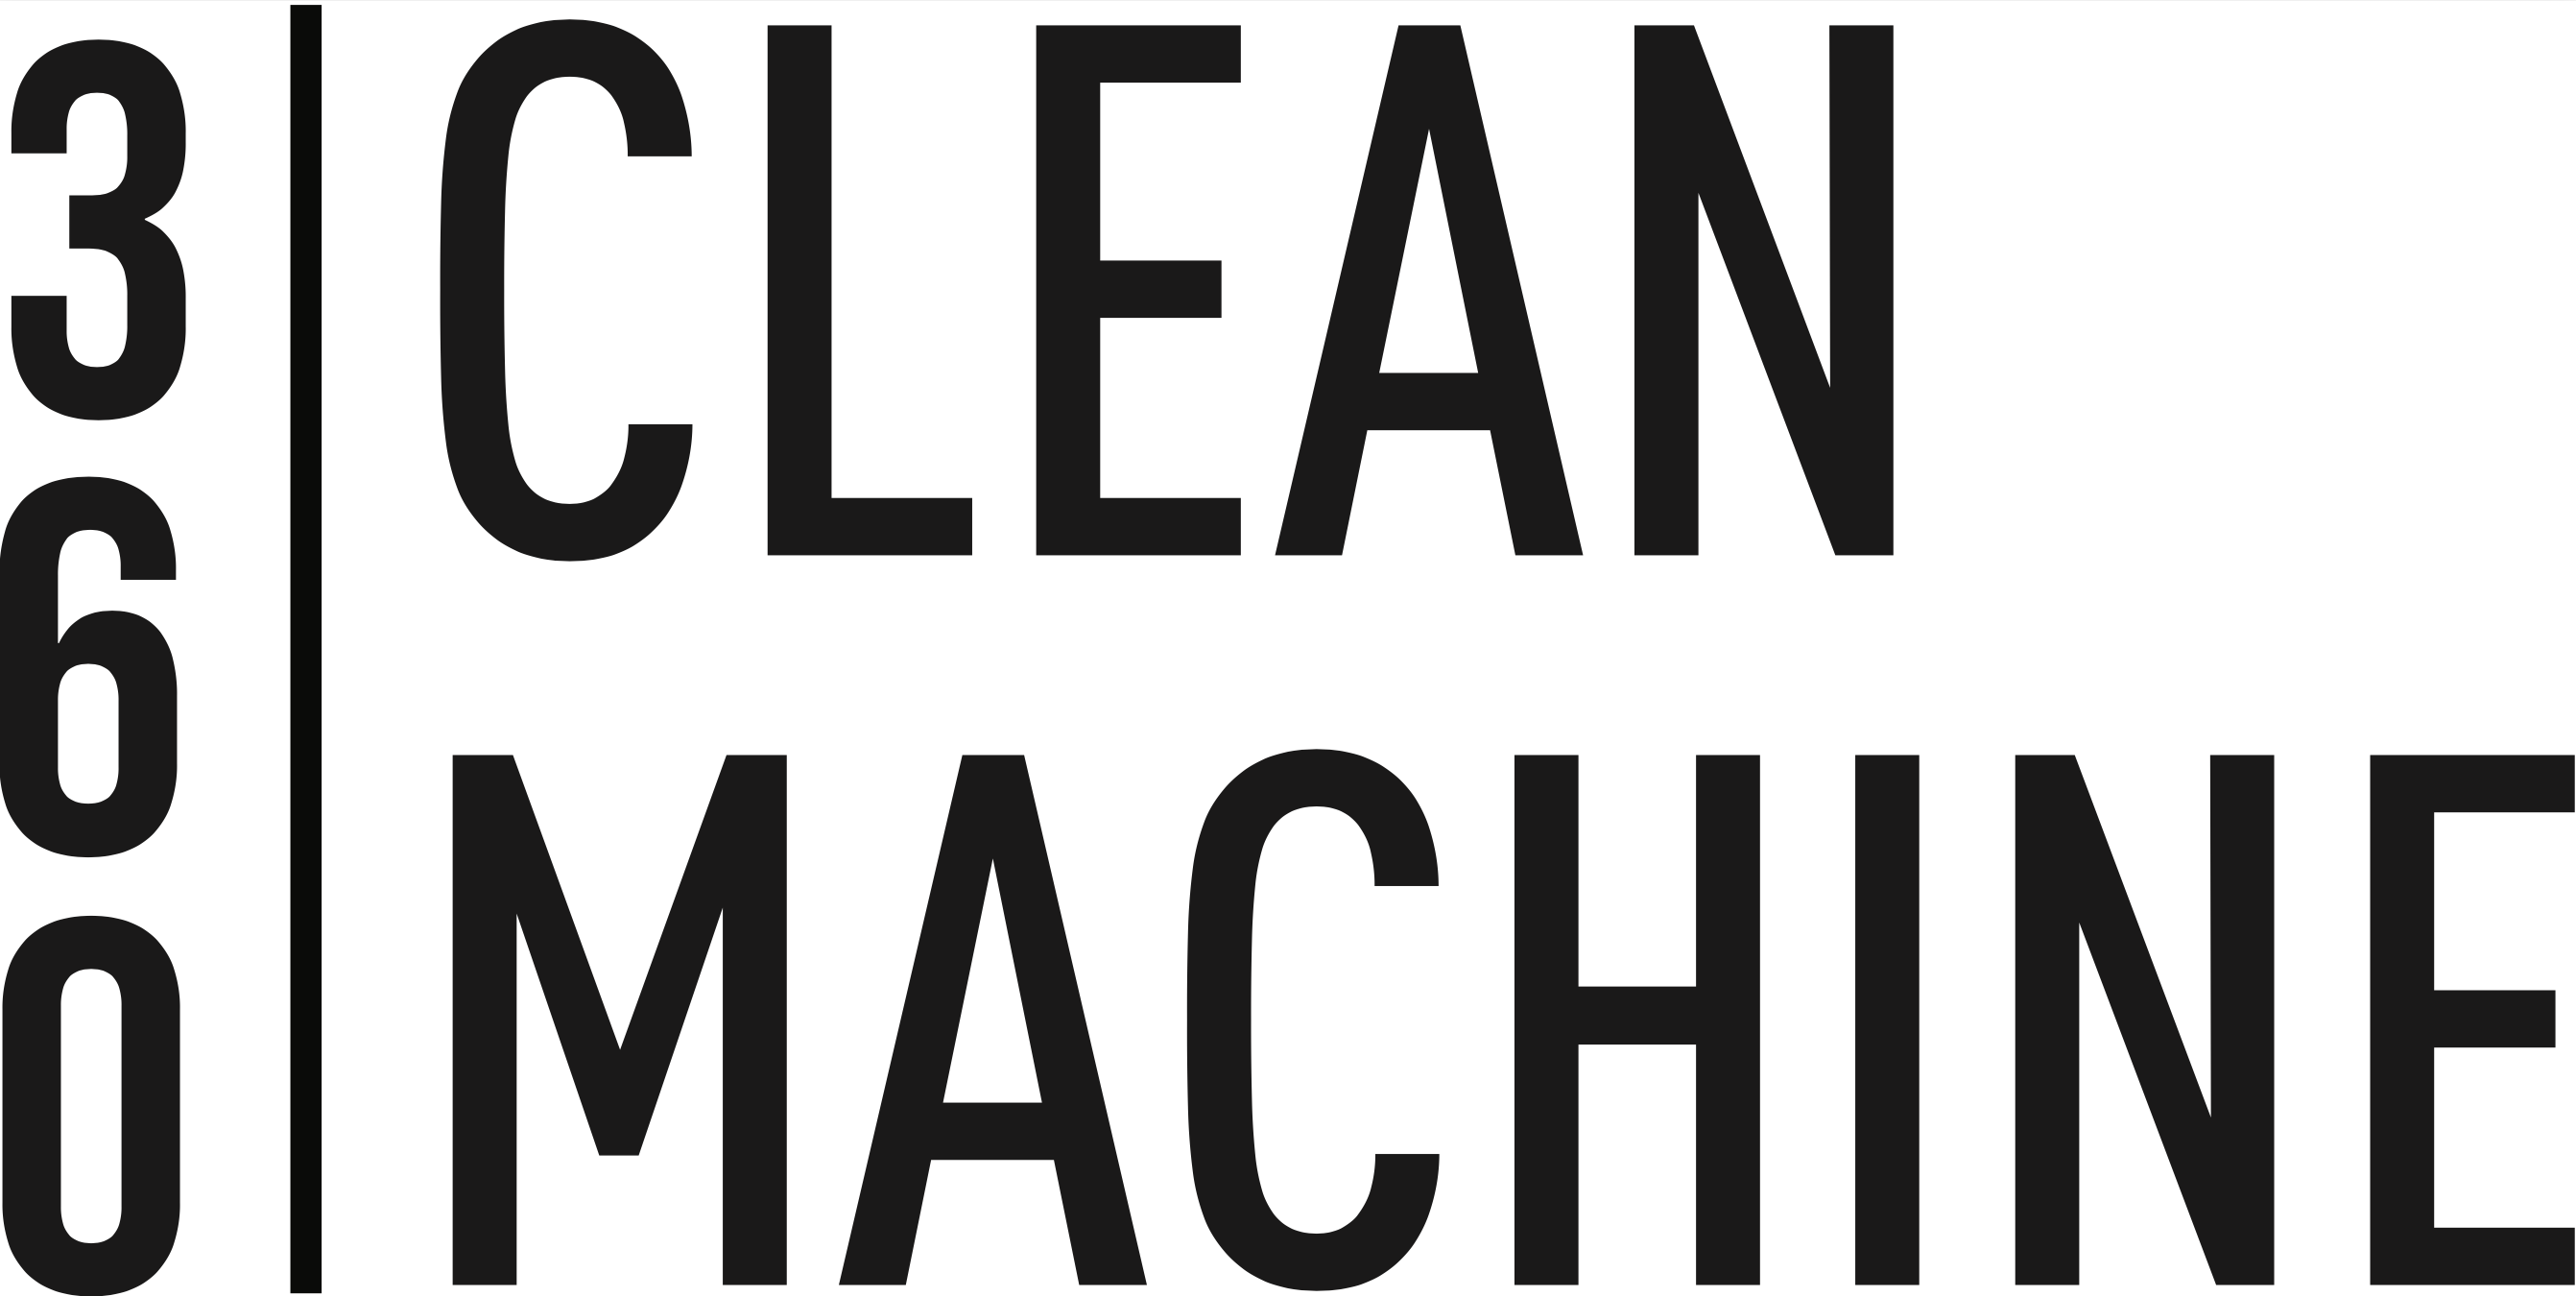 360 Clean Machine